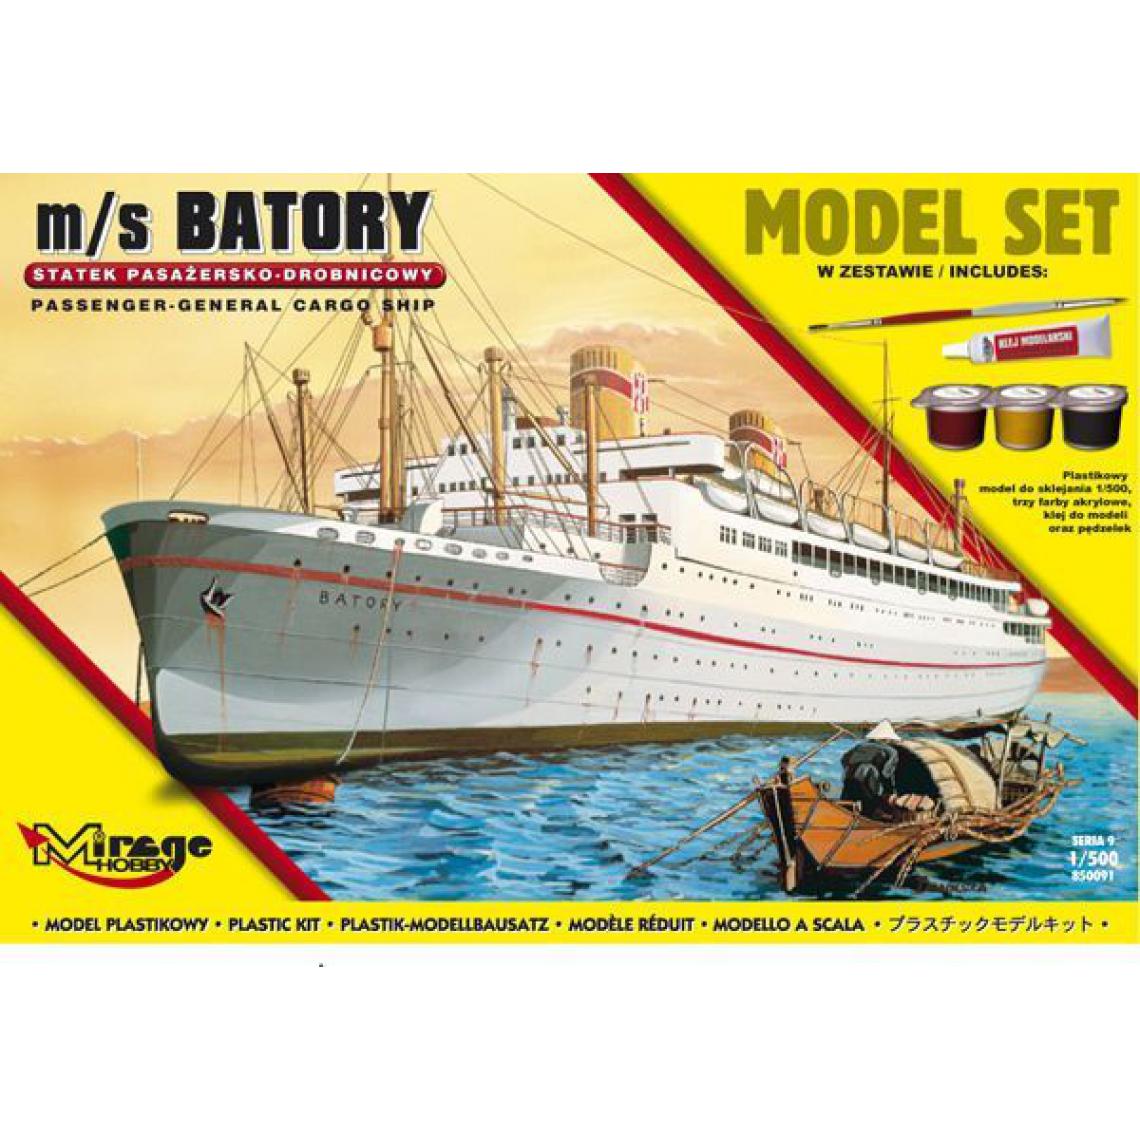 Mirage Hobby - m/s BATORY(Trans-Atlantic Passenger-Gene General Cargo Ship)(Model Set)- 1:500e - Mirage Hobby - Accessoires et pièces